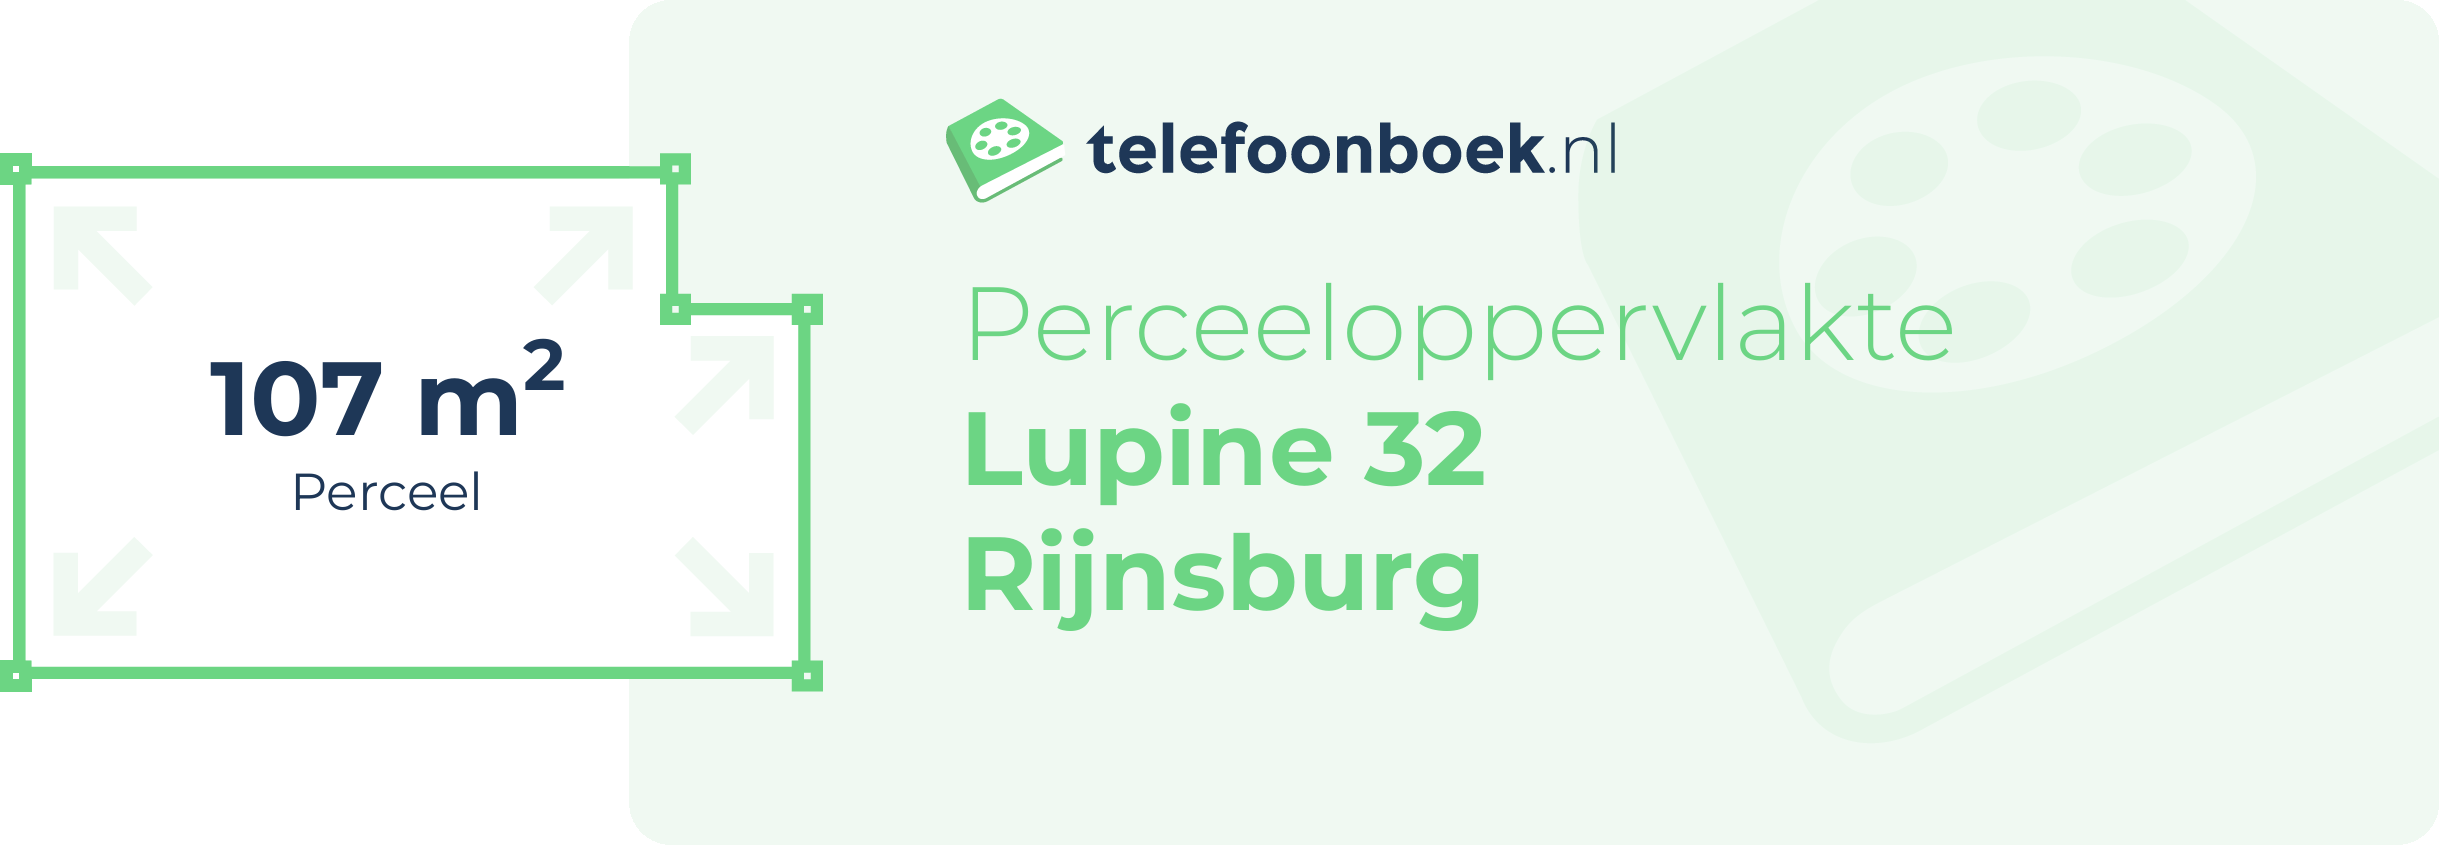 Perceeloppervlakte Lupine 32 Rijnsburg